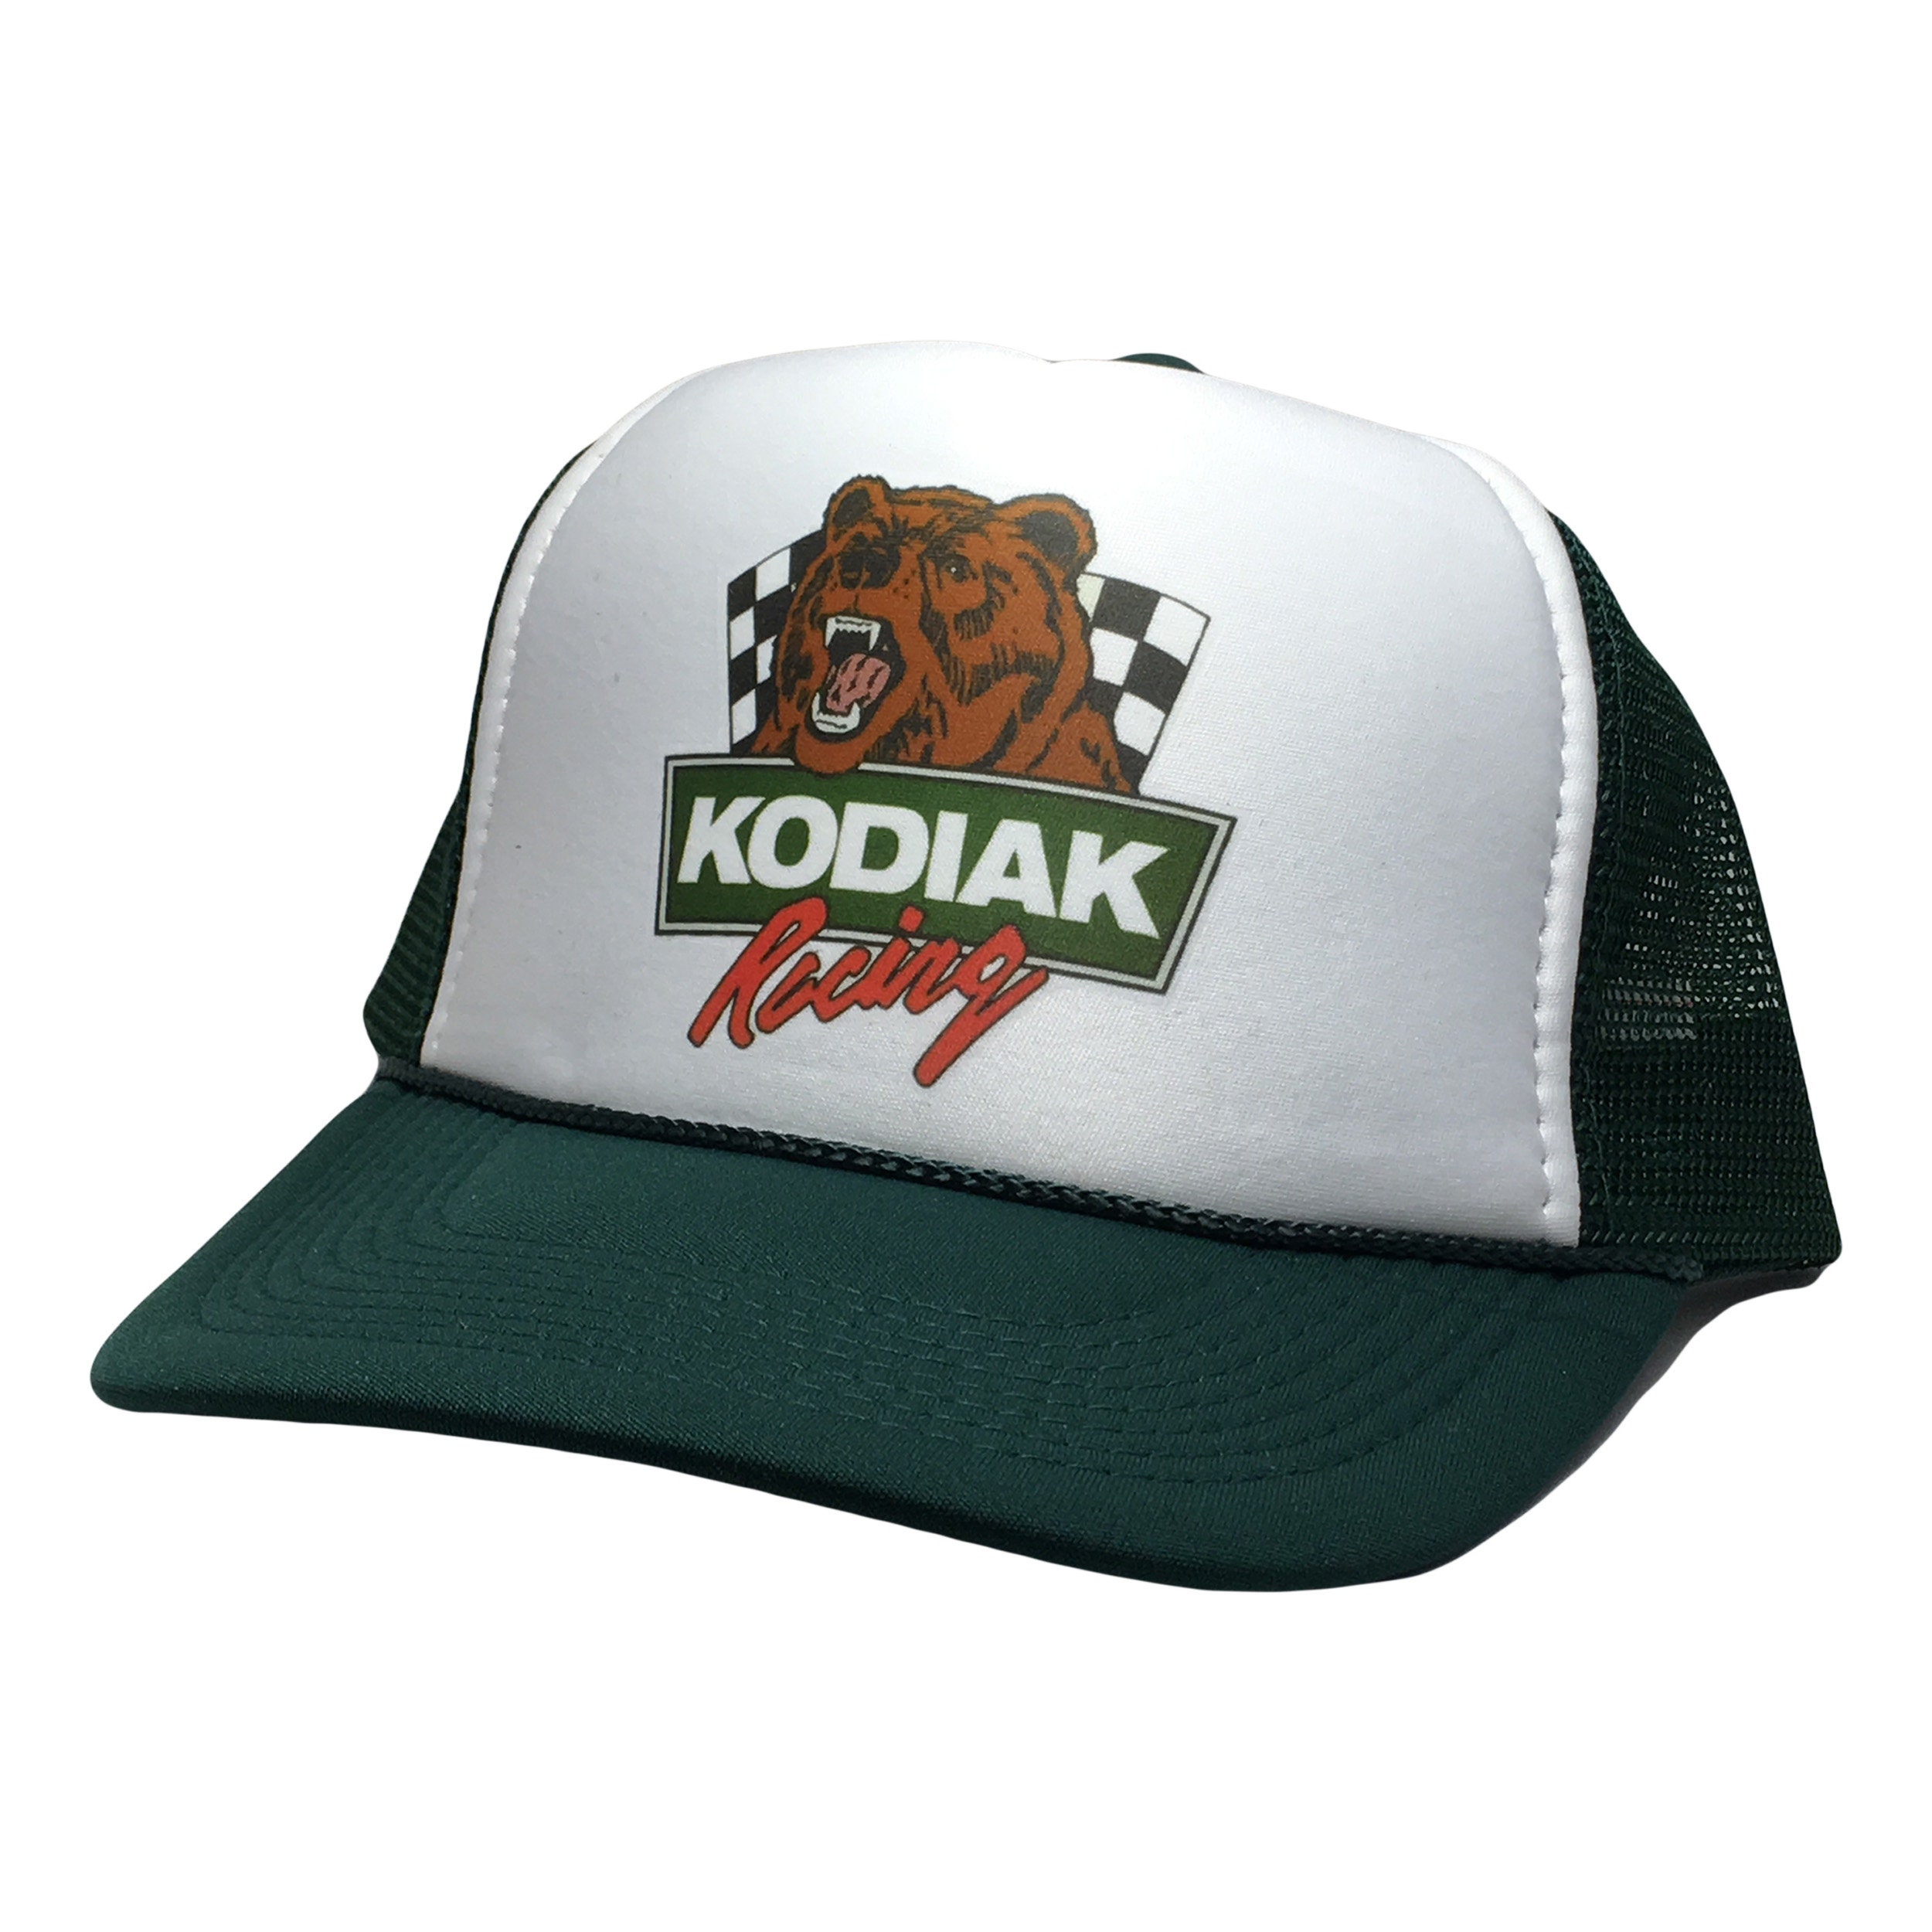 Kodiak Racing Trucker Hat Mesh Hat Vintage Snapback Hat Dark Green -   Australia